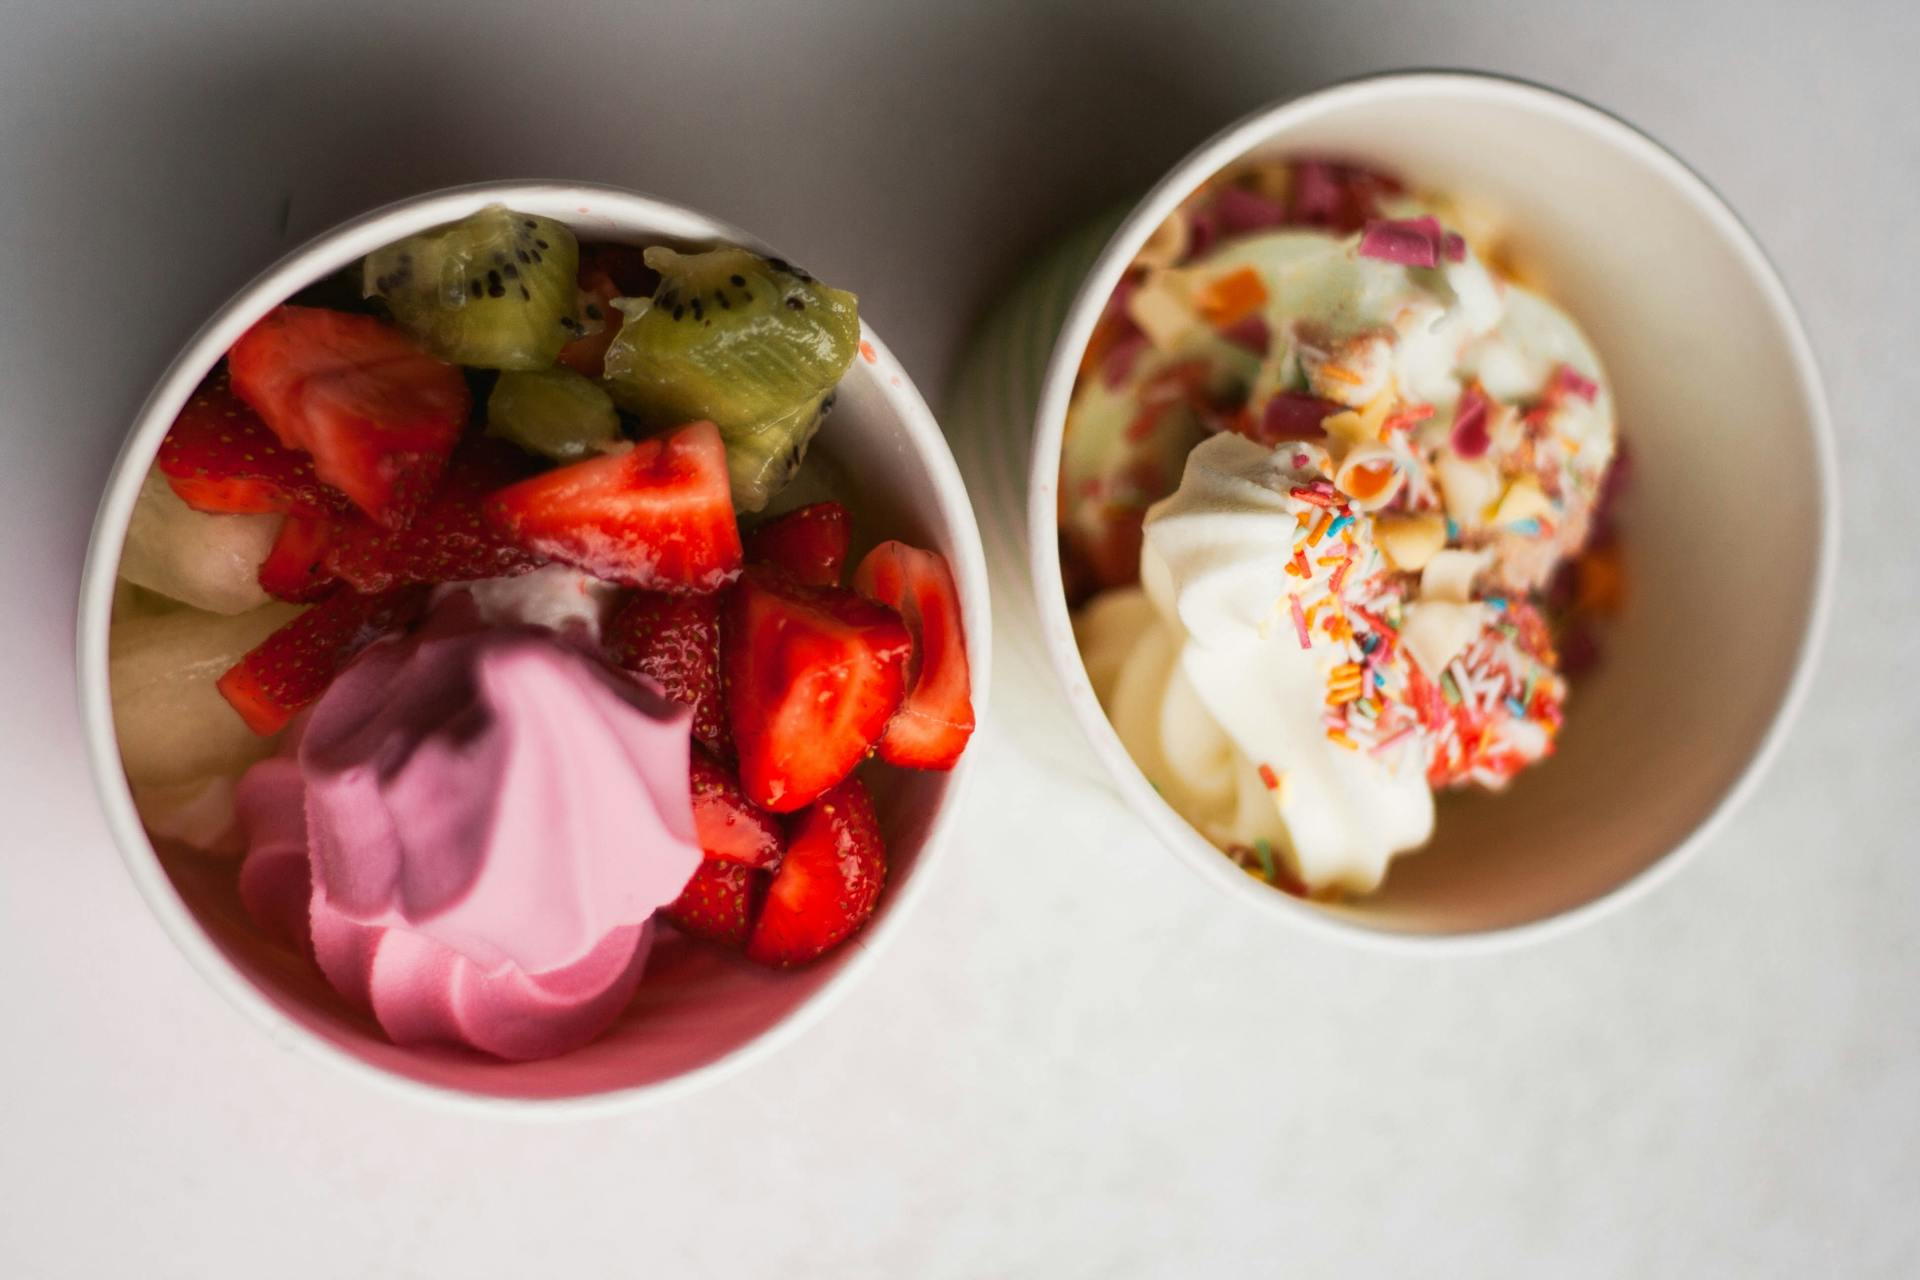 Bowls of ice cream | Source: Pexels